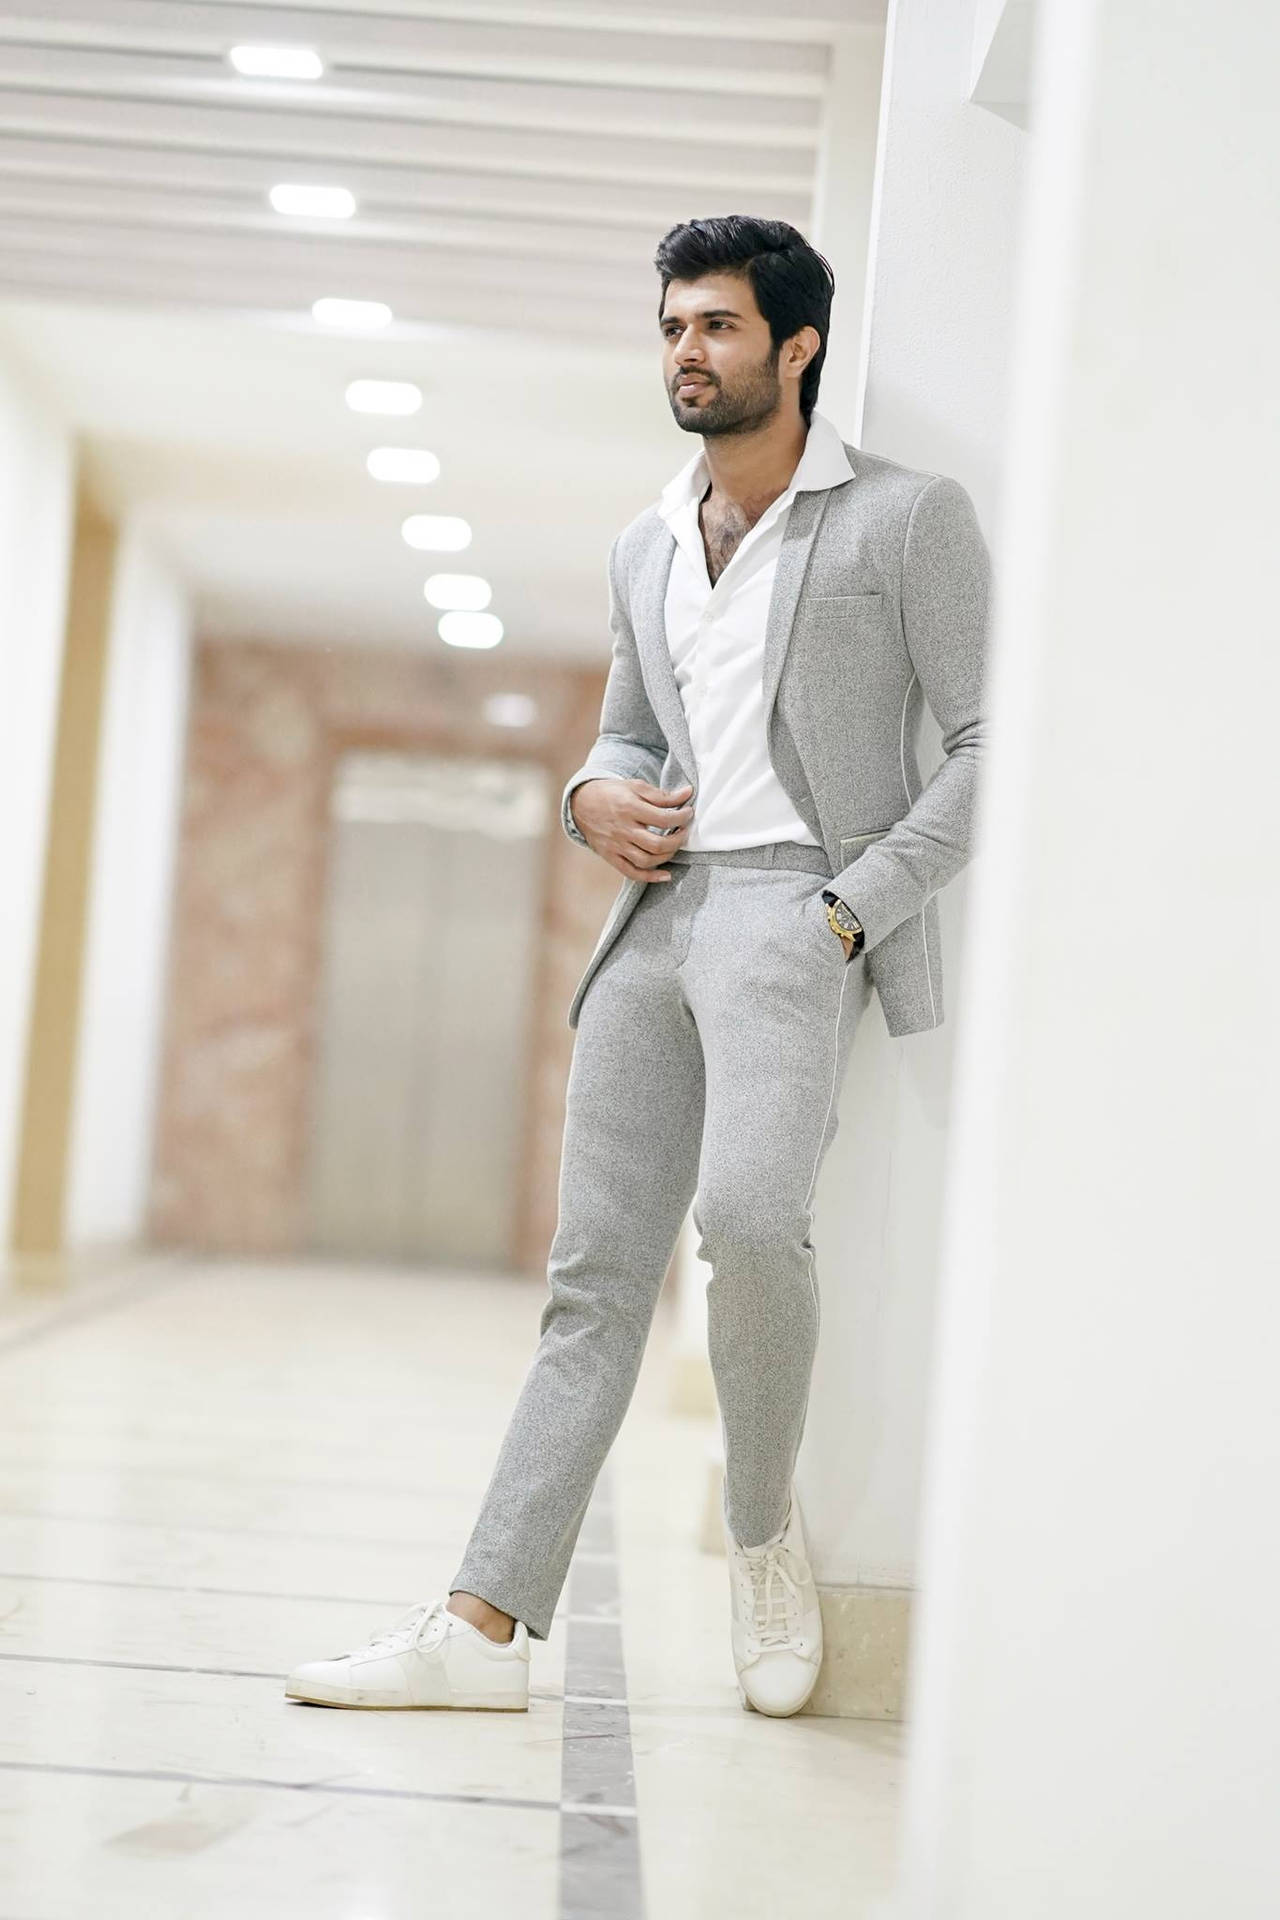 Vijay Deverakonda Gray Suit 4k Background